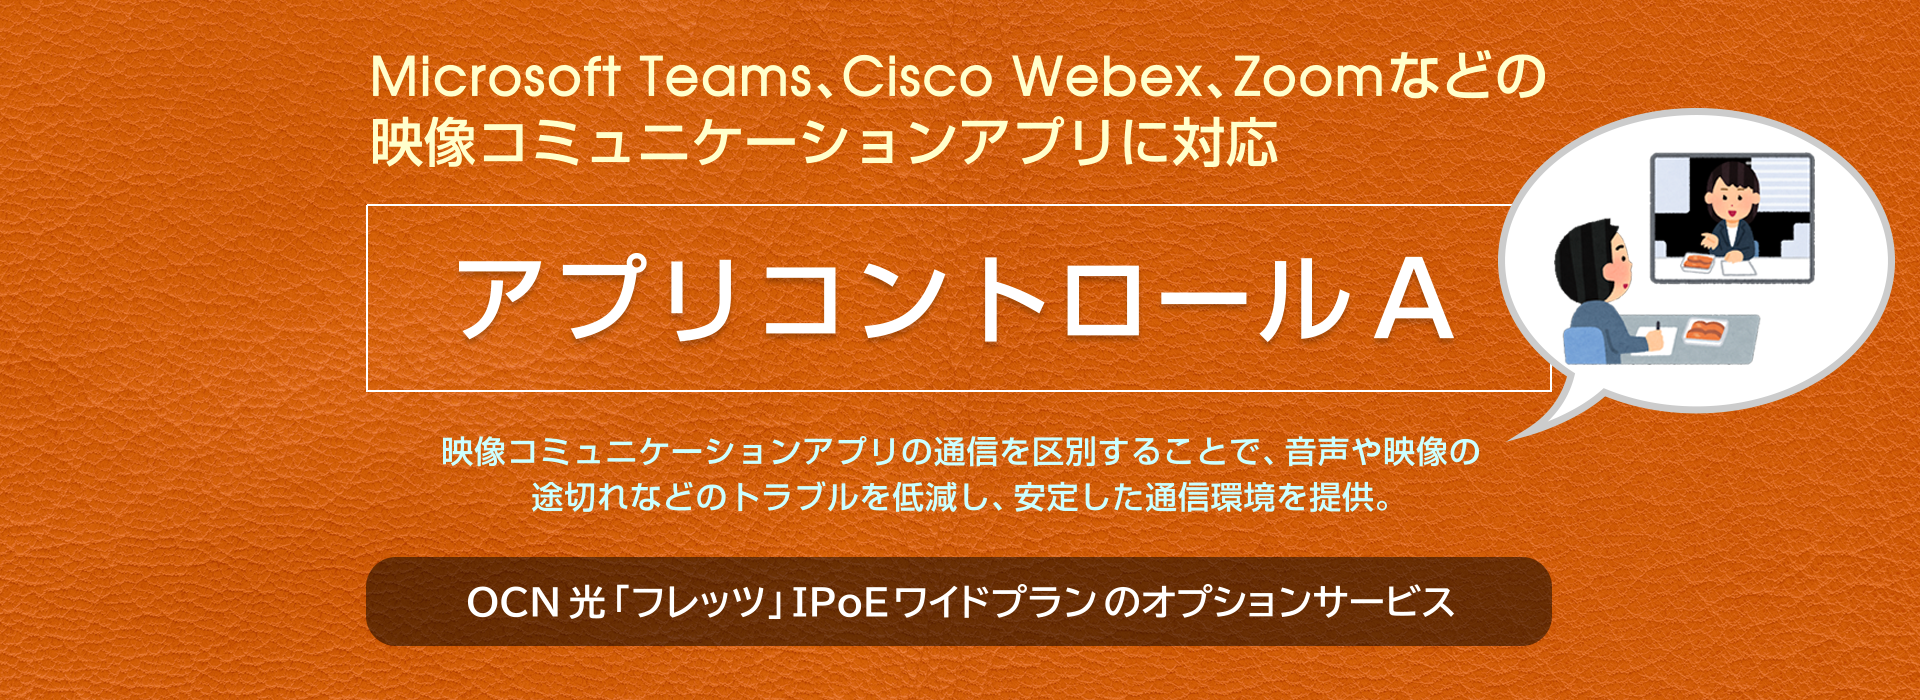 Microsoft TeamsやCisco Webex、Zoomなどの映像コミュニケーションアプリの通信安定化に「アプリコントロールA」